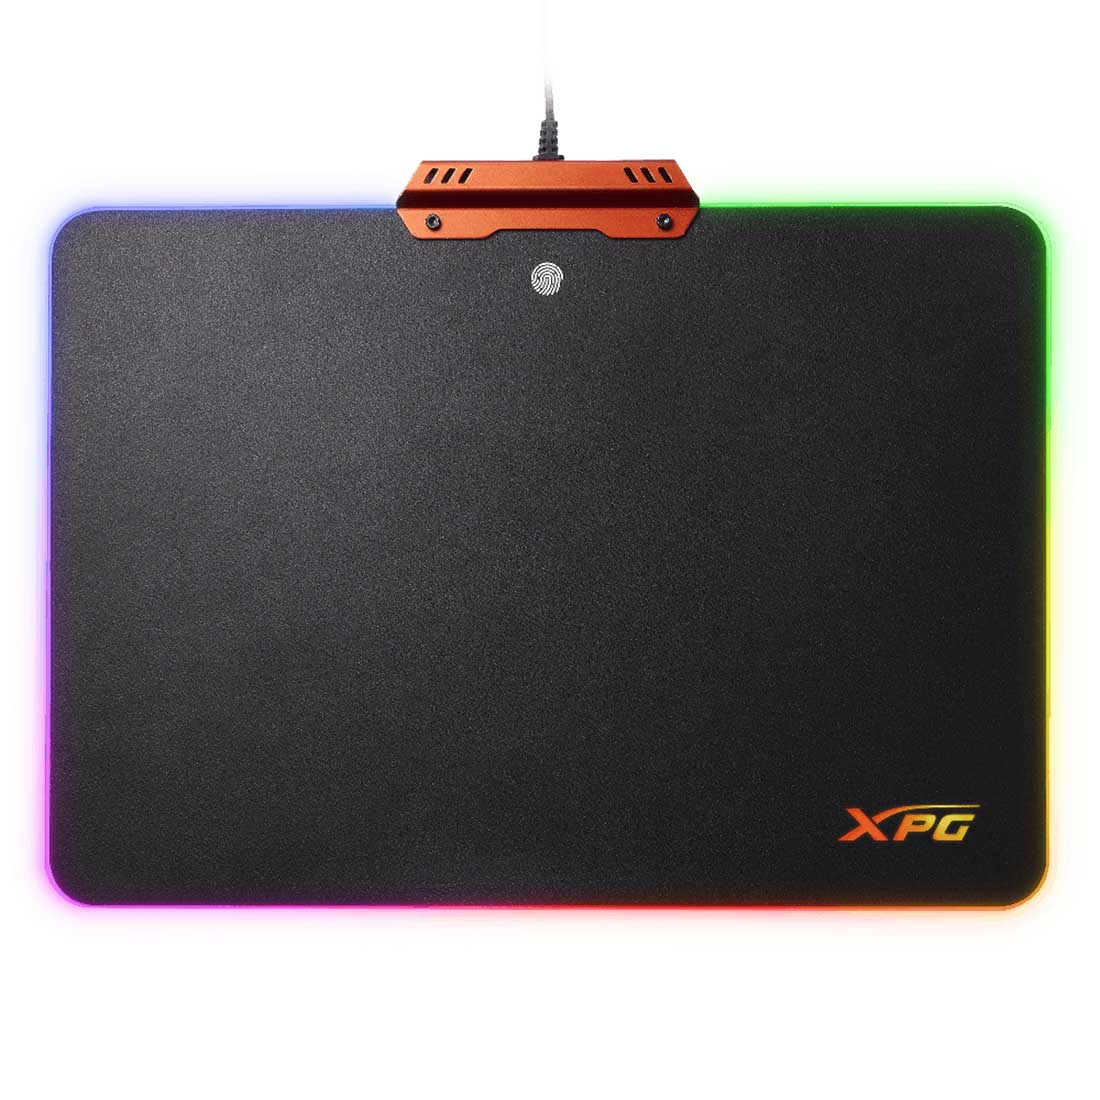 XPG INFAREX R10 Gaming Mousepad with RGB Lighting Effects